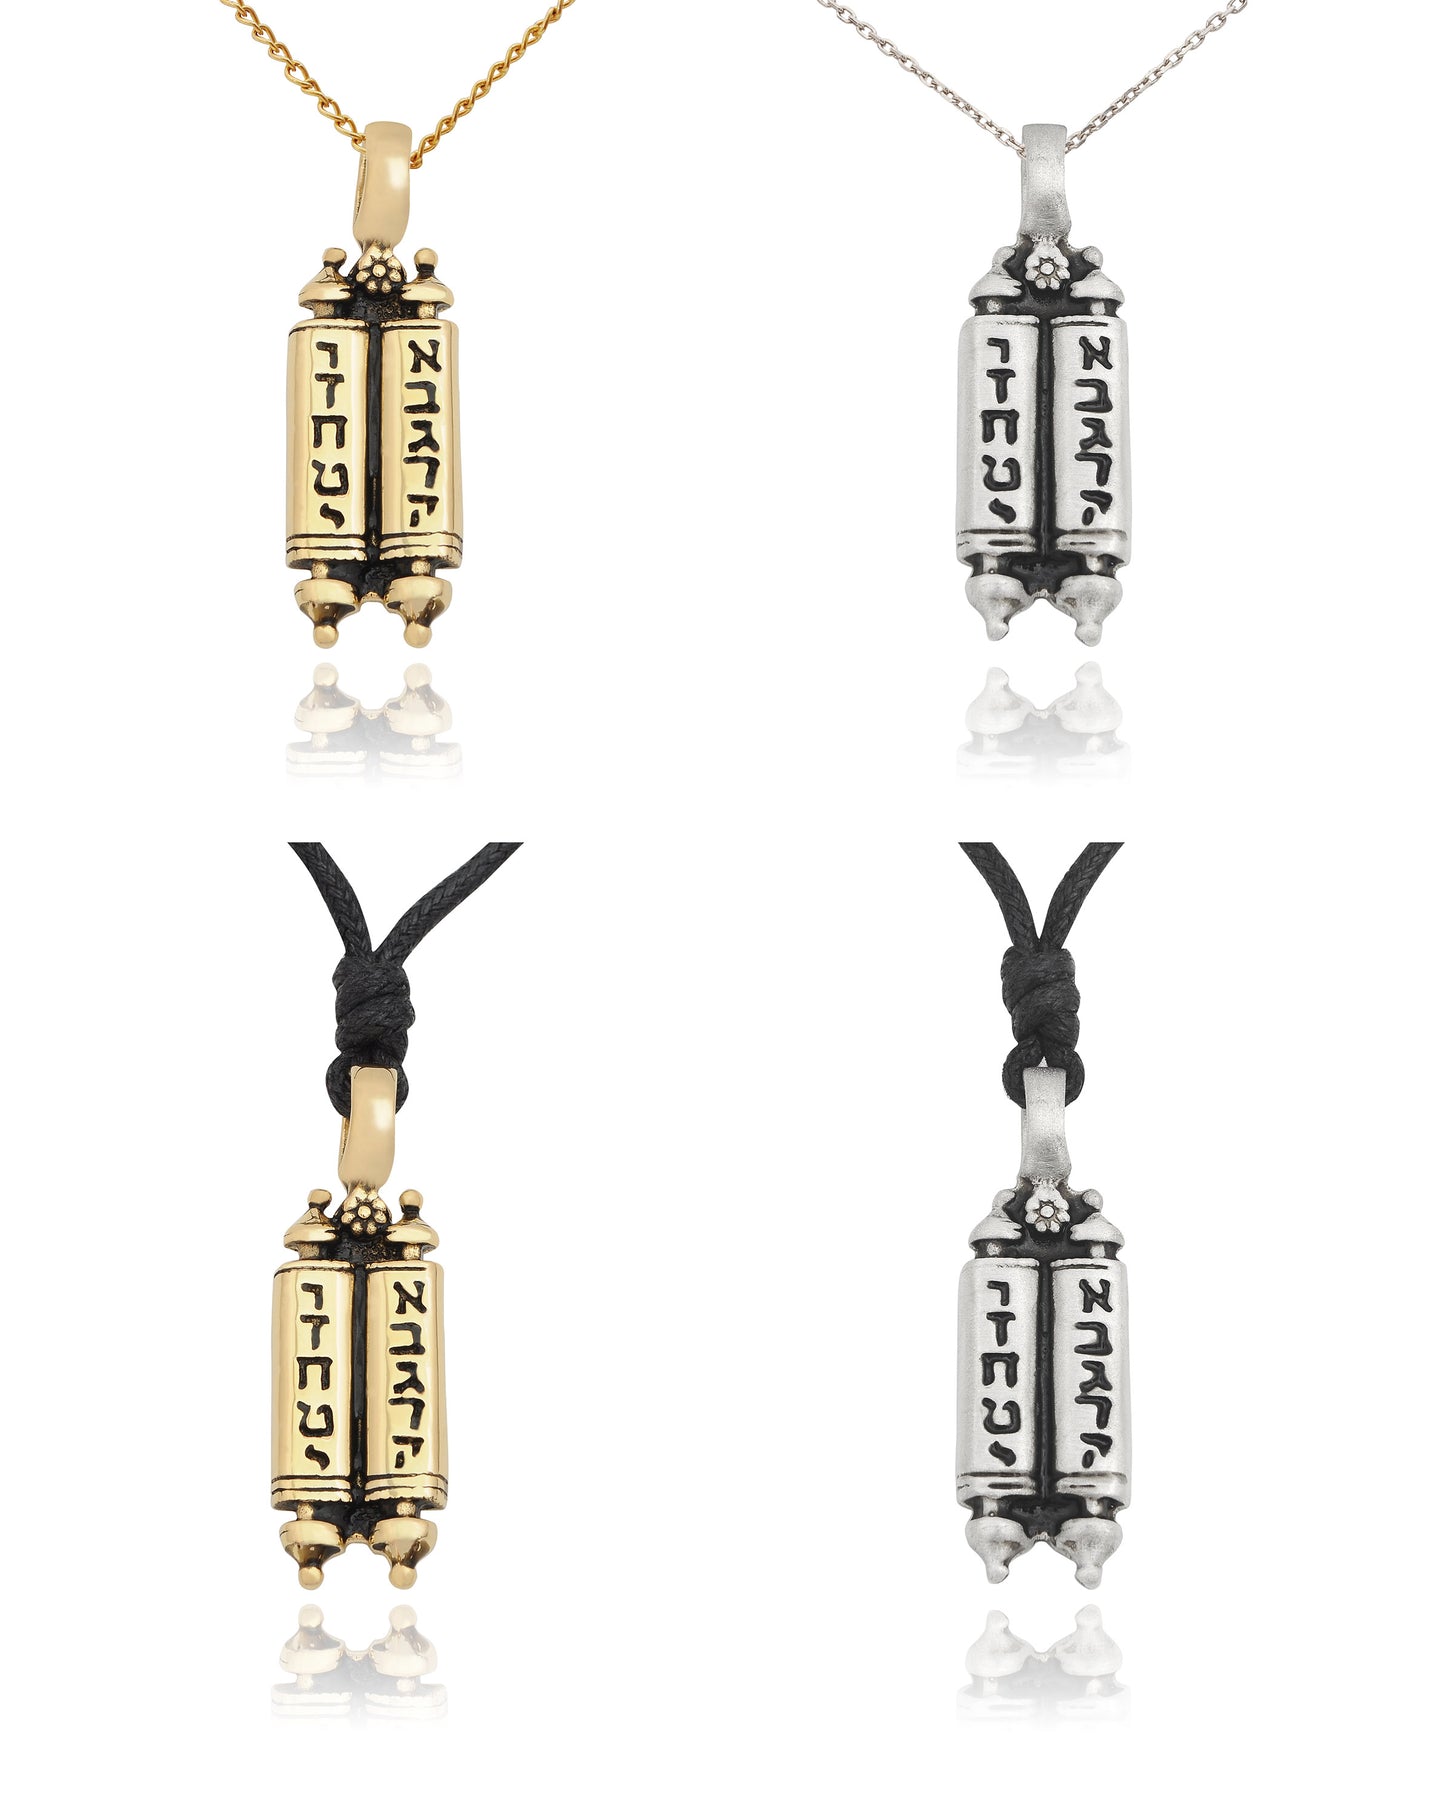 Jewish Torah ScrollBook Silver Pewter Gold Brass Charm Necklace Pendant Jewelry